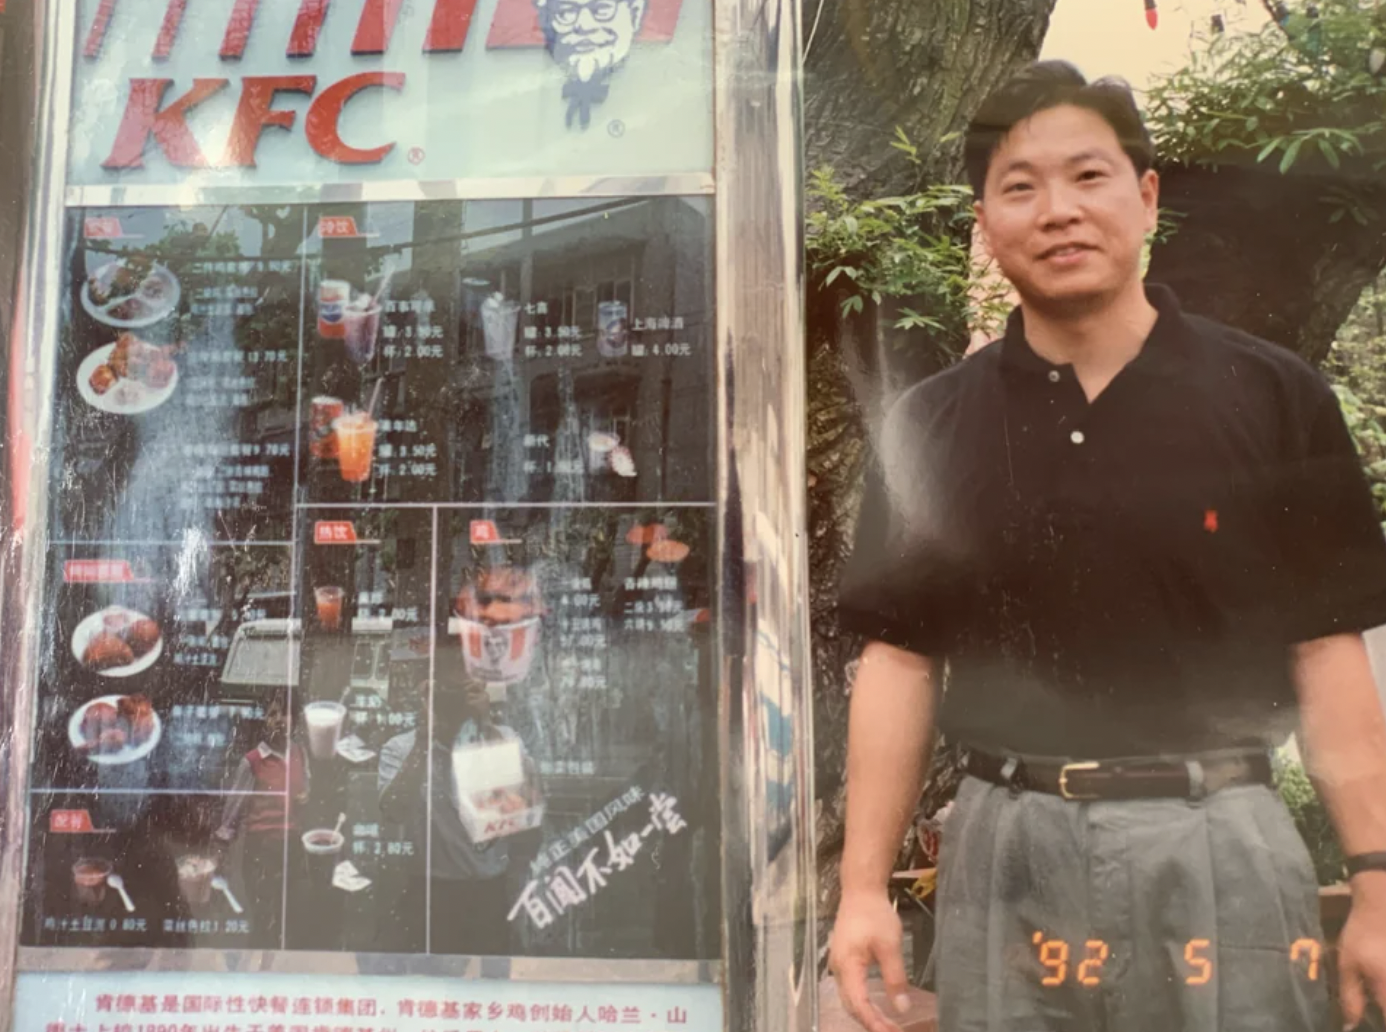 “My dad next to a KFC menu in China, 1992.”